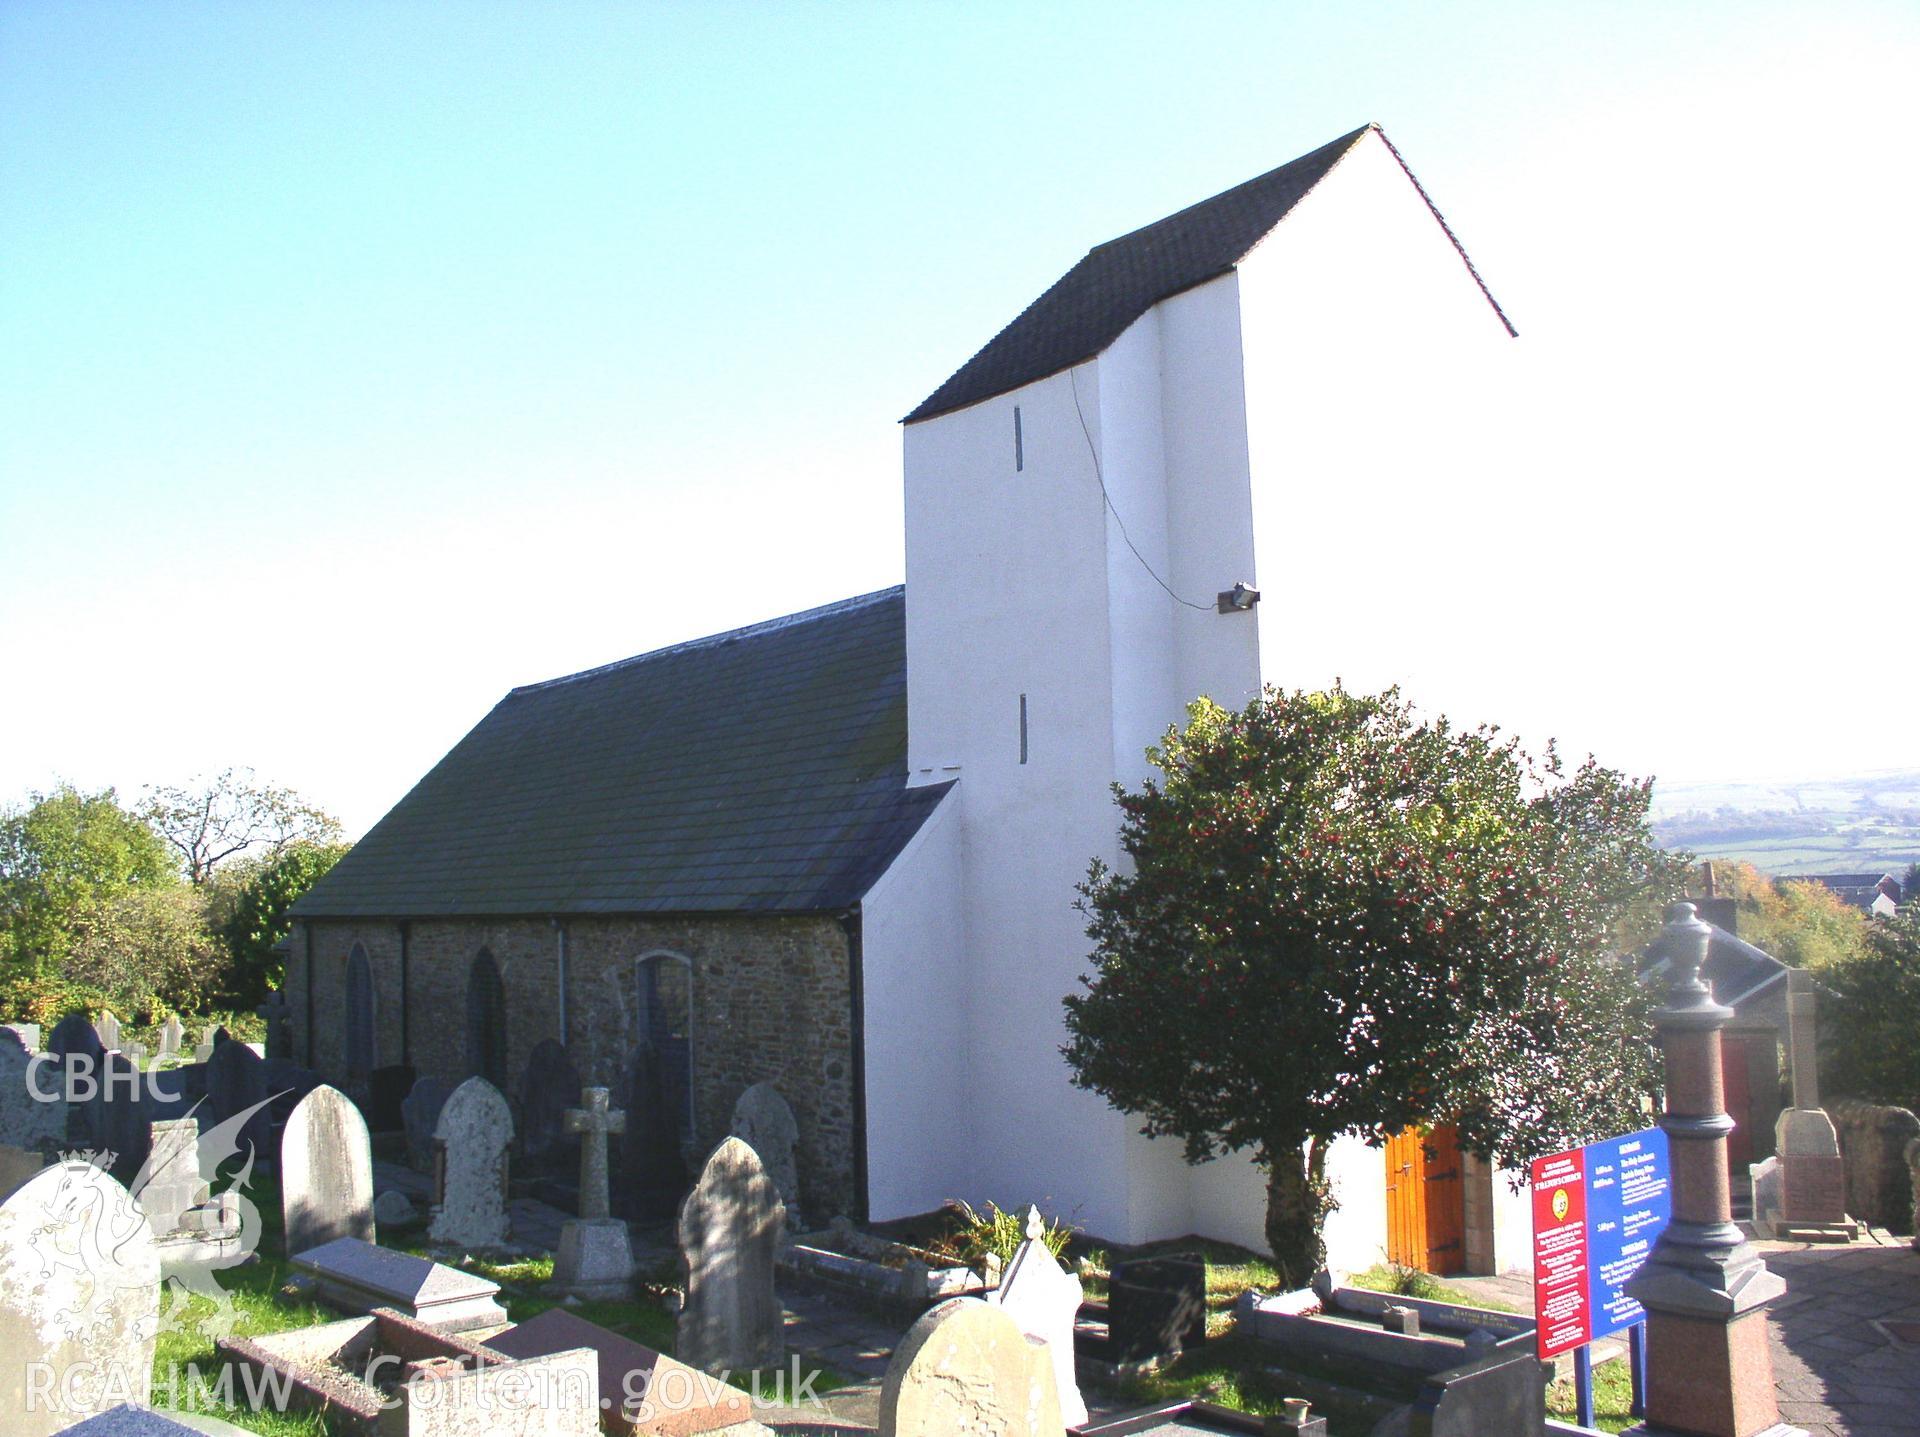 Colour digital photograph showing the exterior of Saint Illtyd's Church, Llantwit Fardre; Glamorgan.